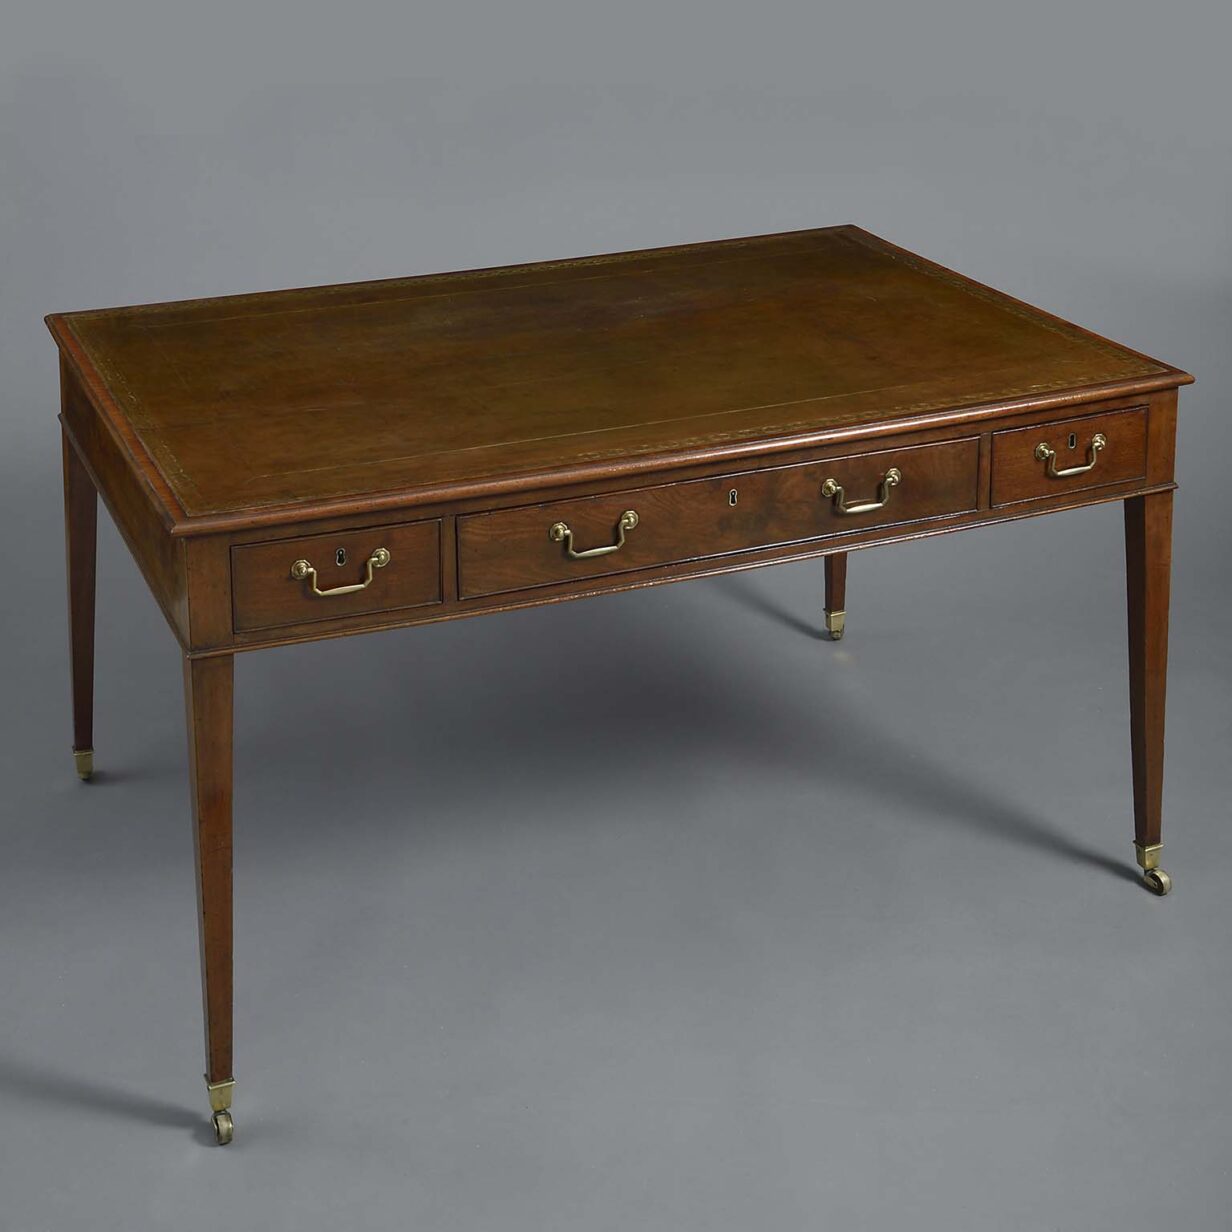 Late 18th century george iii period mahogany writing table